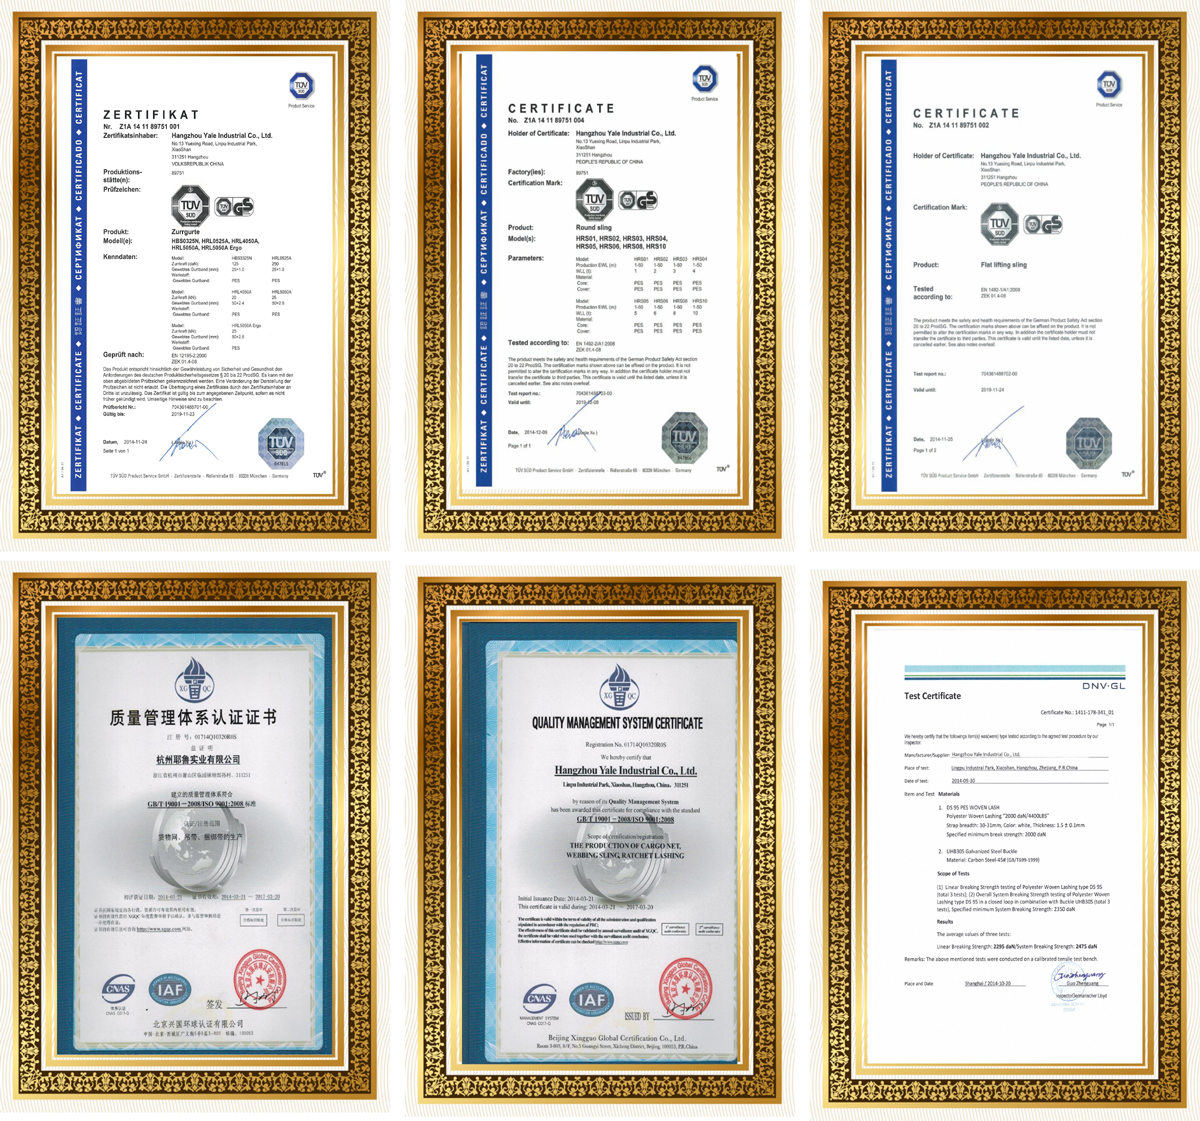 Yaletech Product Certificates